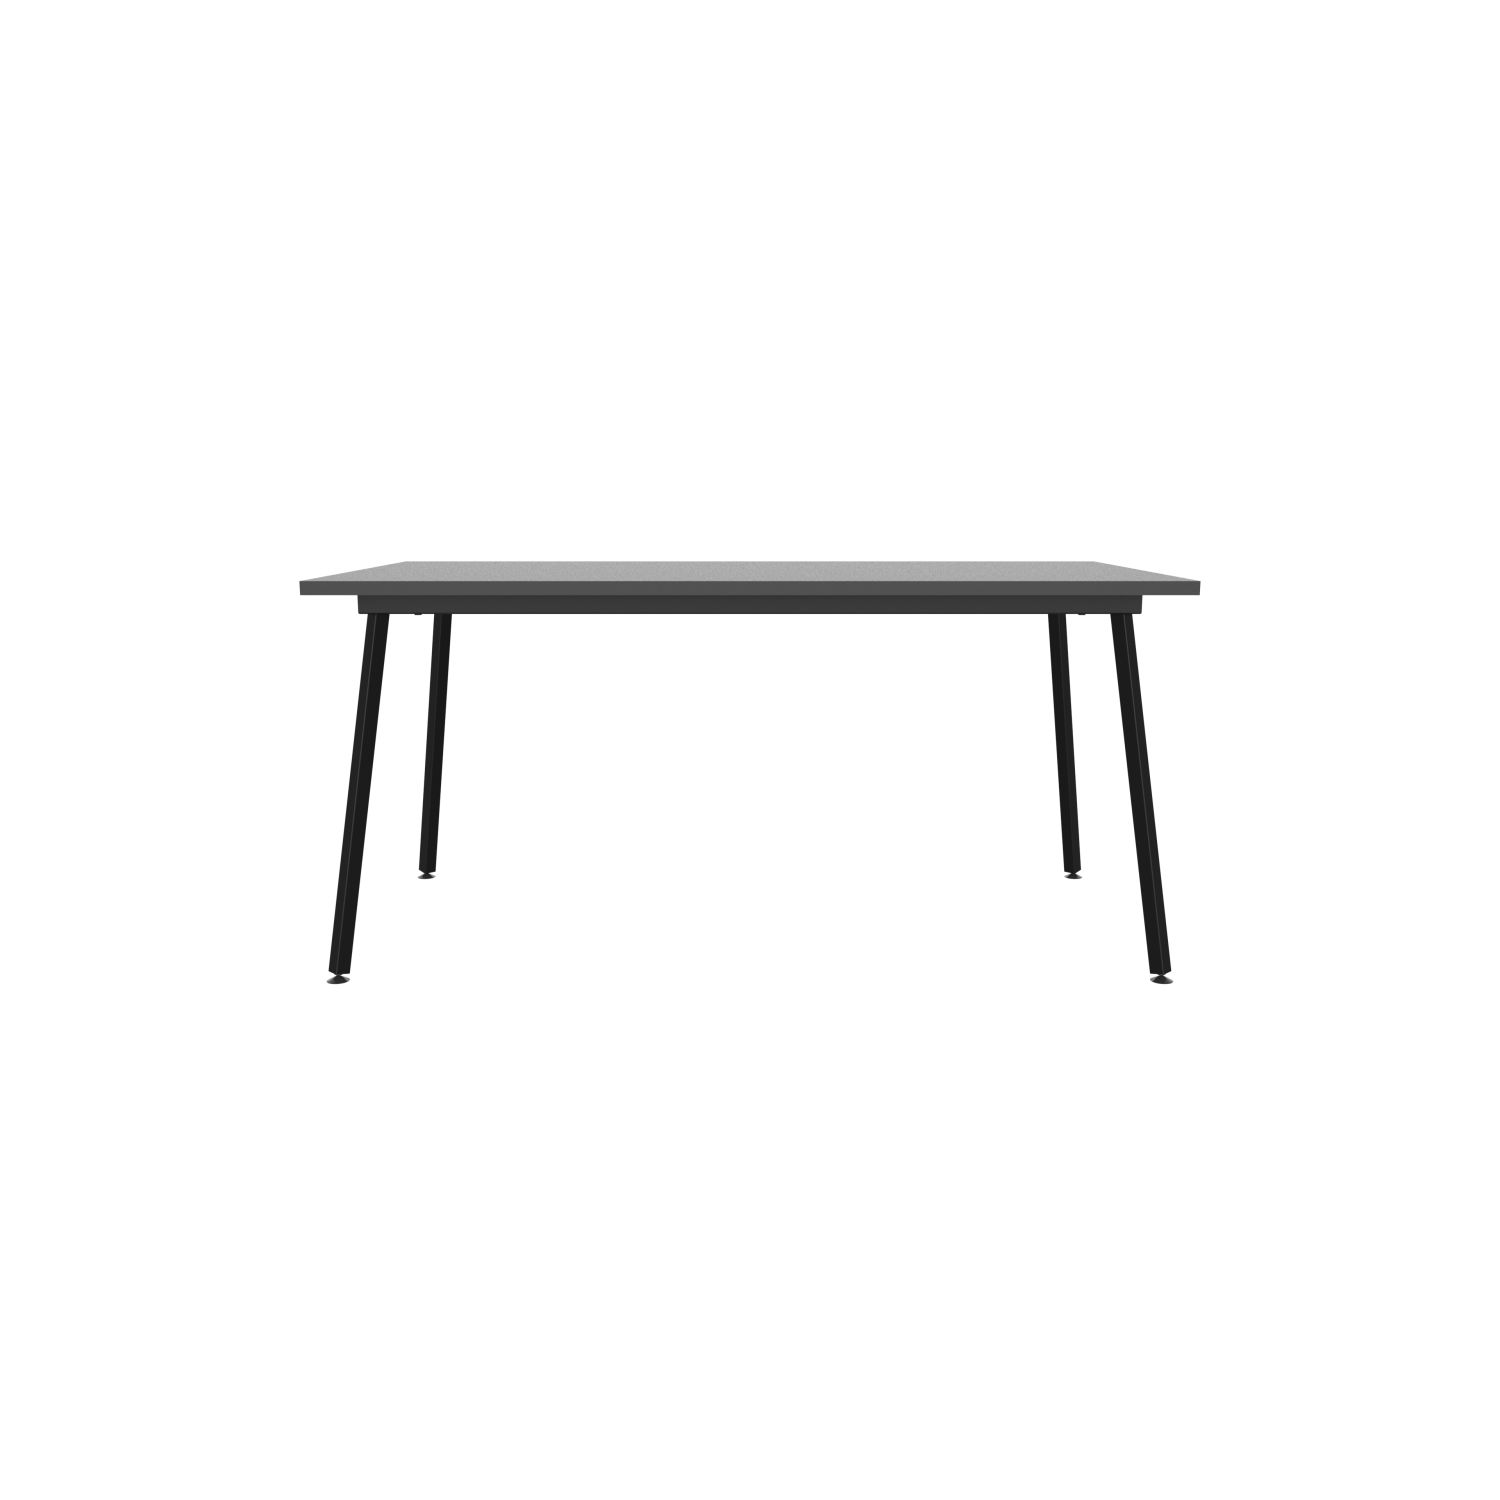 lensvelt maarten baas table fixed height 80x160 table top 26 mm top melamine black edge abs black black frame ral9005